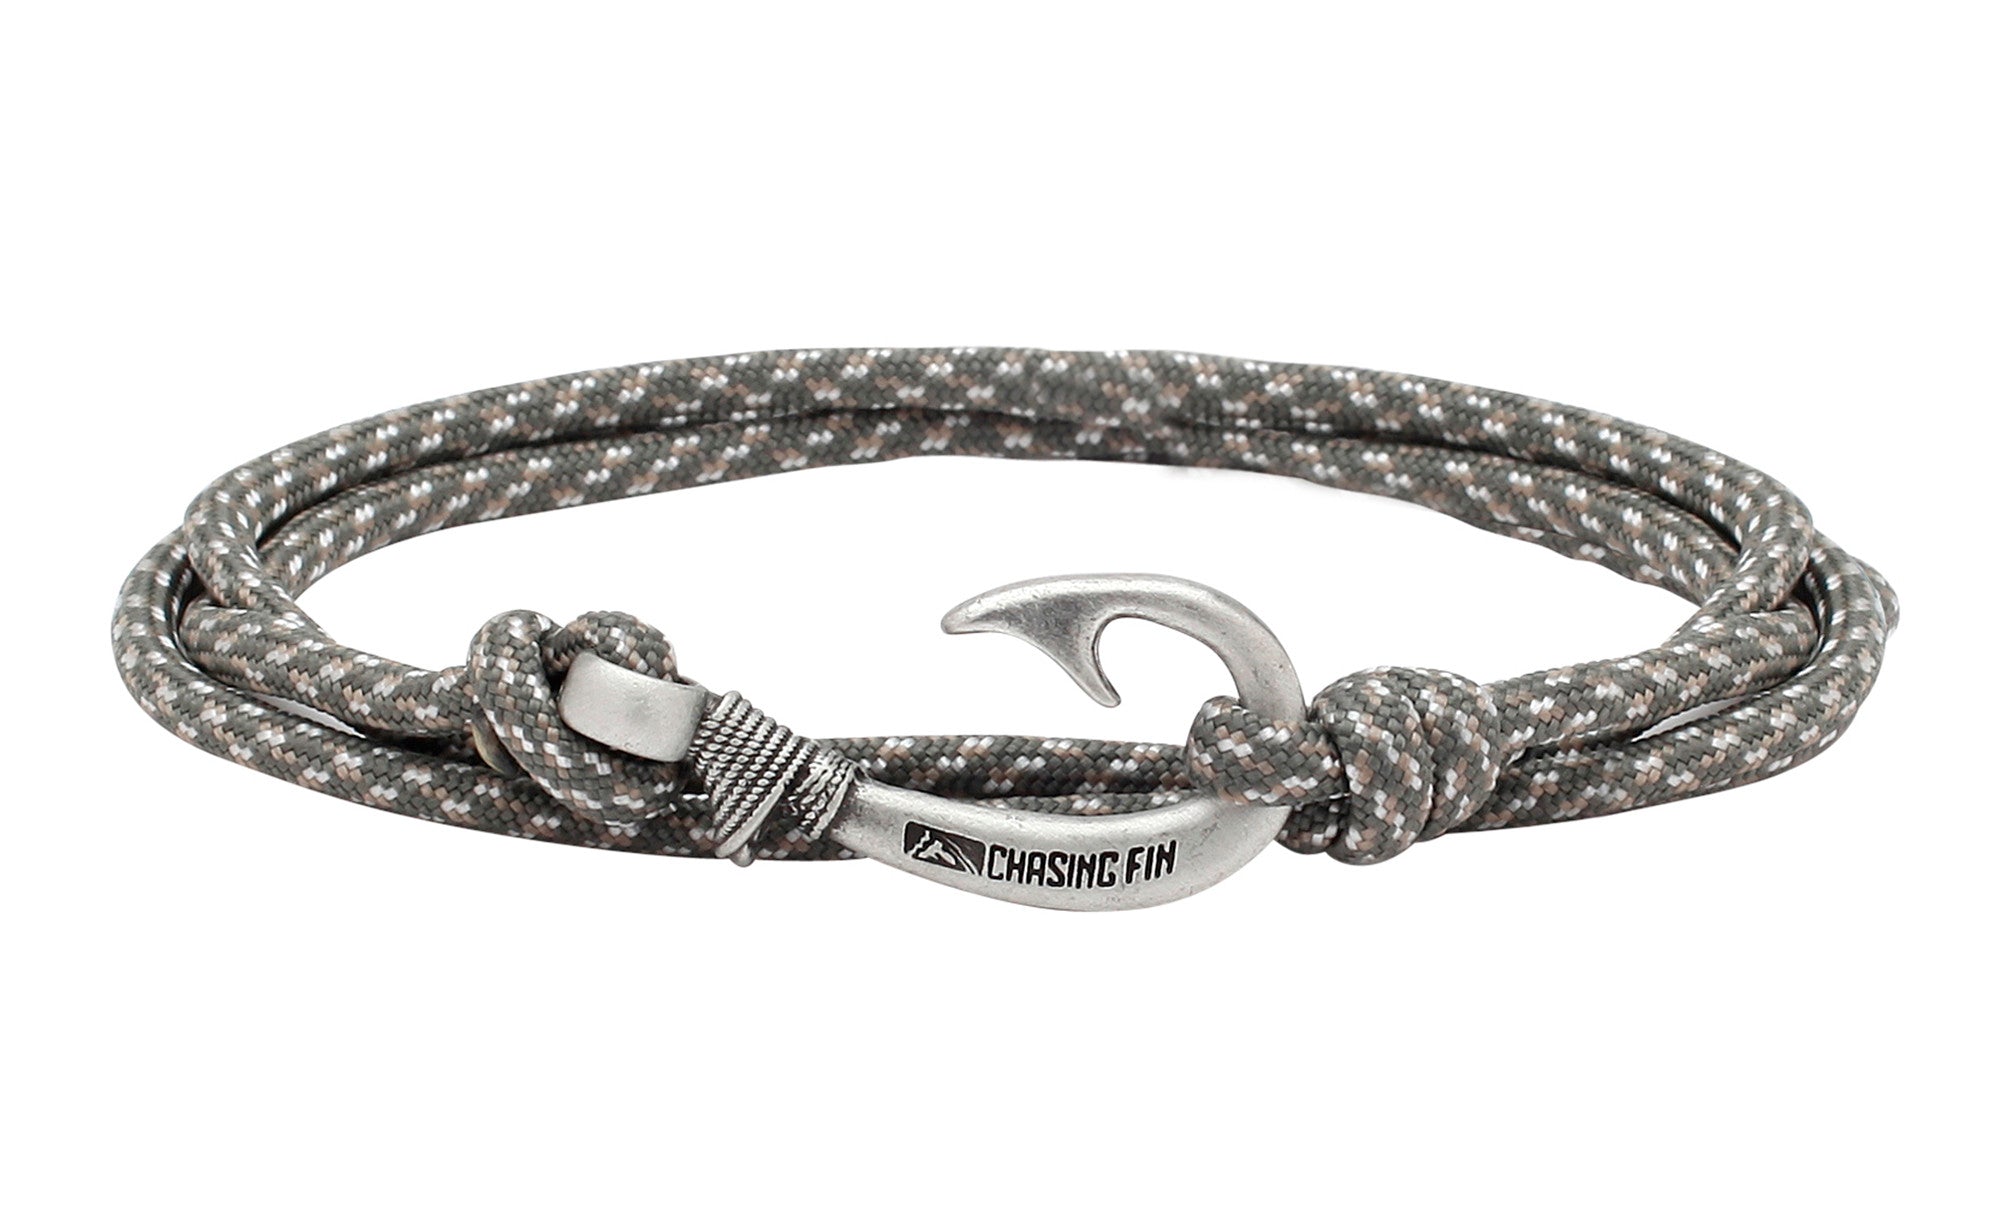 Digital Camo Fish Hook Bracelet – Fish Hook Bracelets